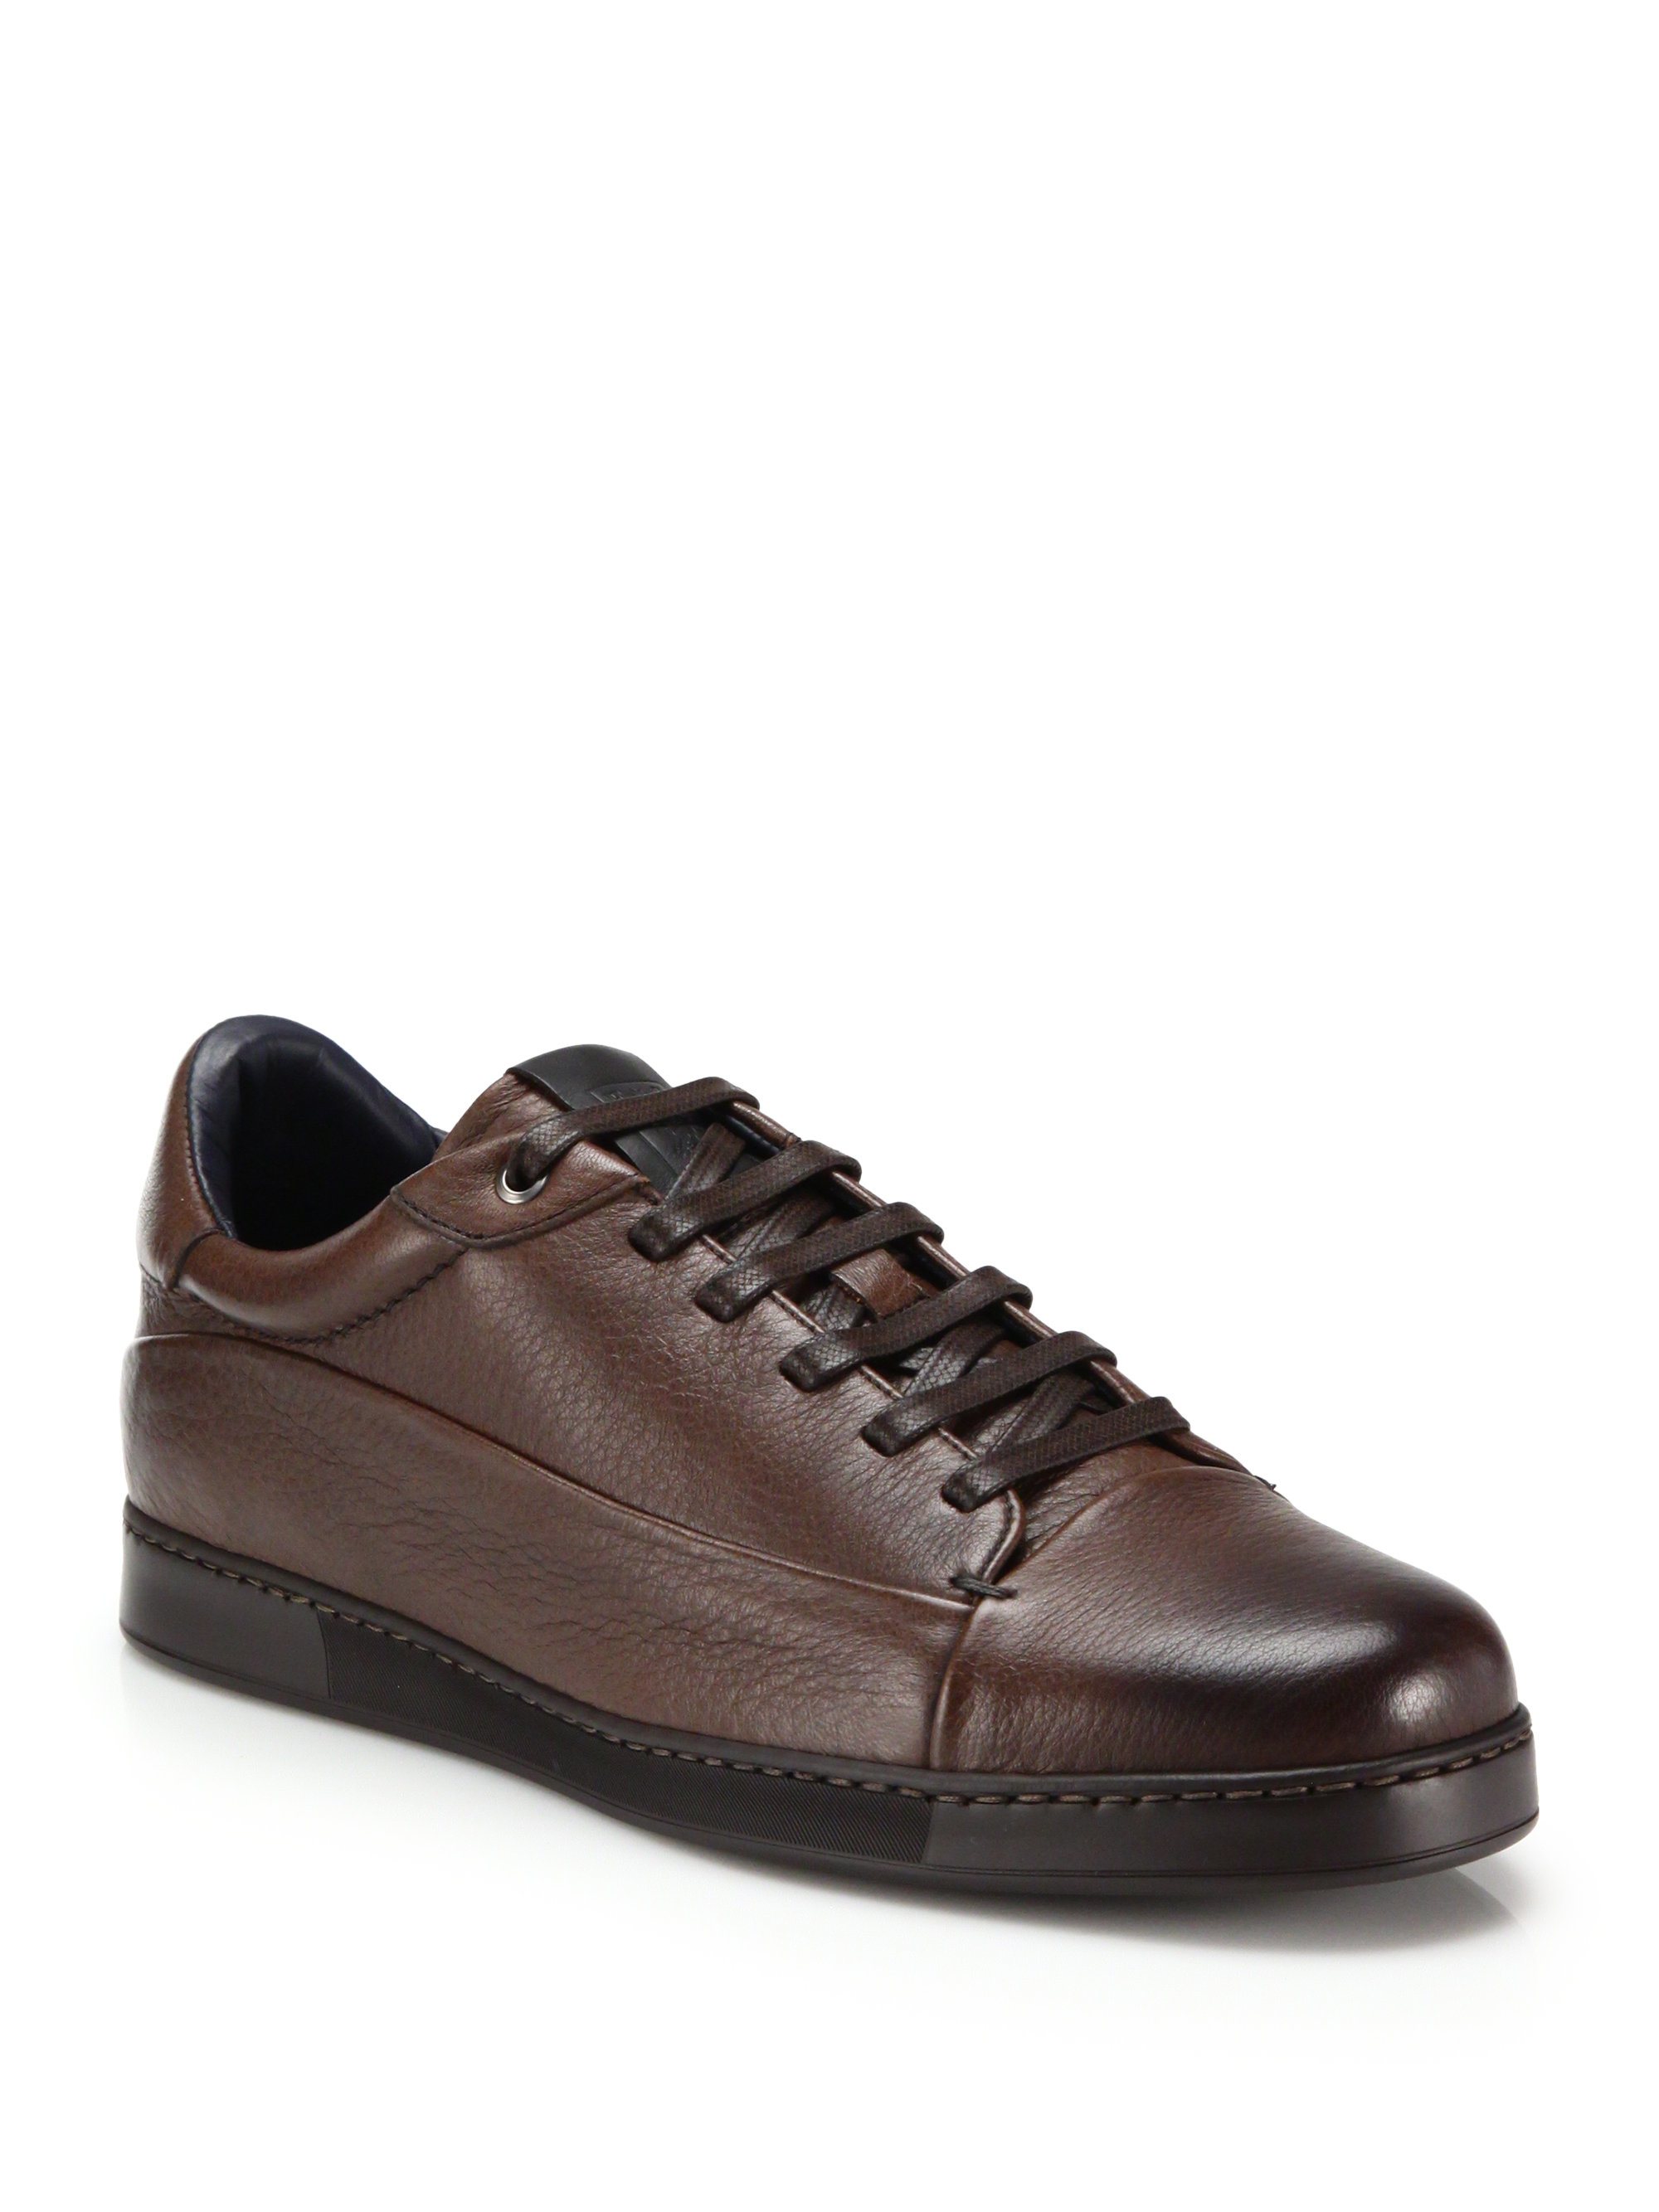 Lyst - Ermenegildo Zegna Manhattan Leather Sneakers in Brown for Men